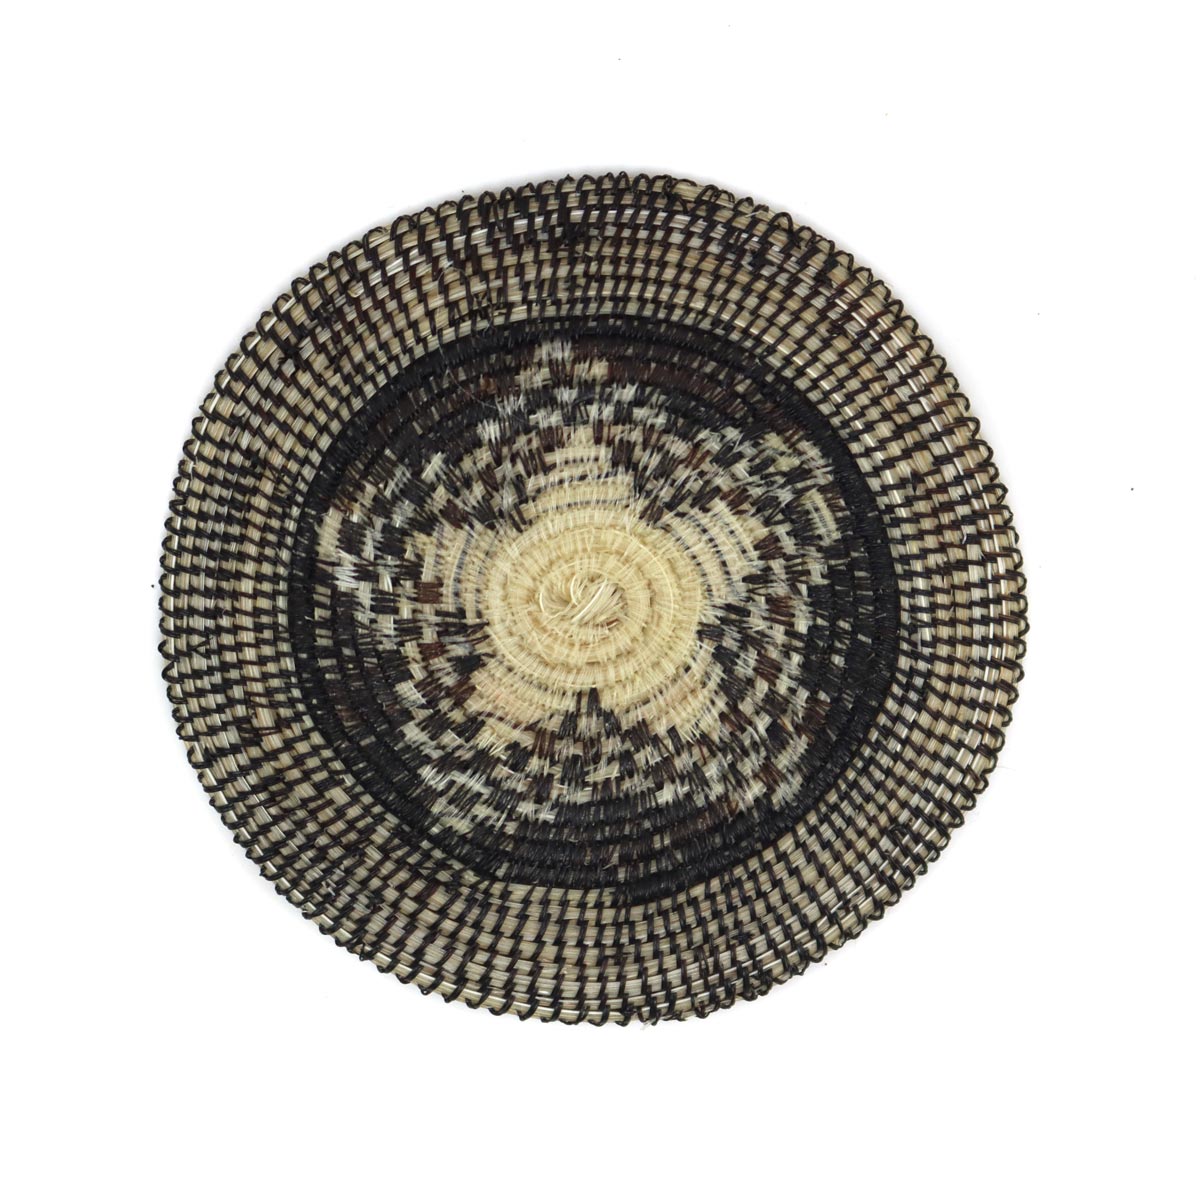 Tohono O'odham Contemporary Miniature Horsehair Basket with Star Design, 2.5" diameter (SK3342)1
